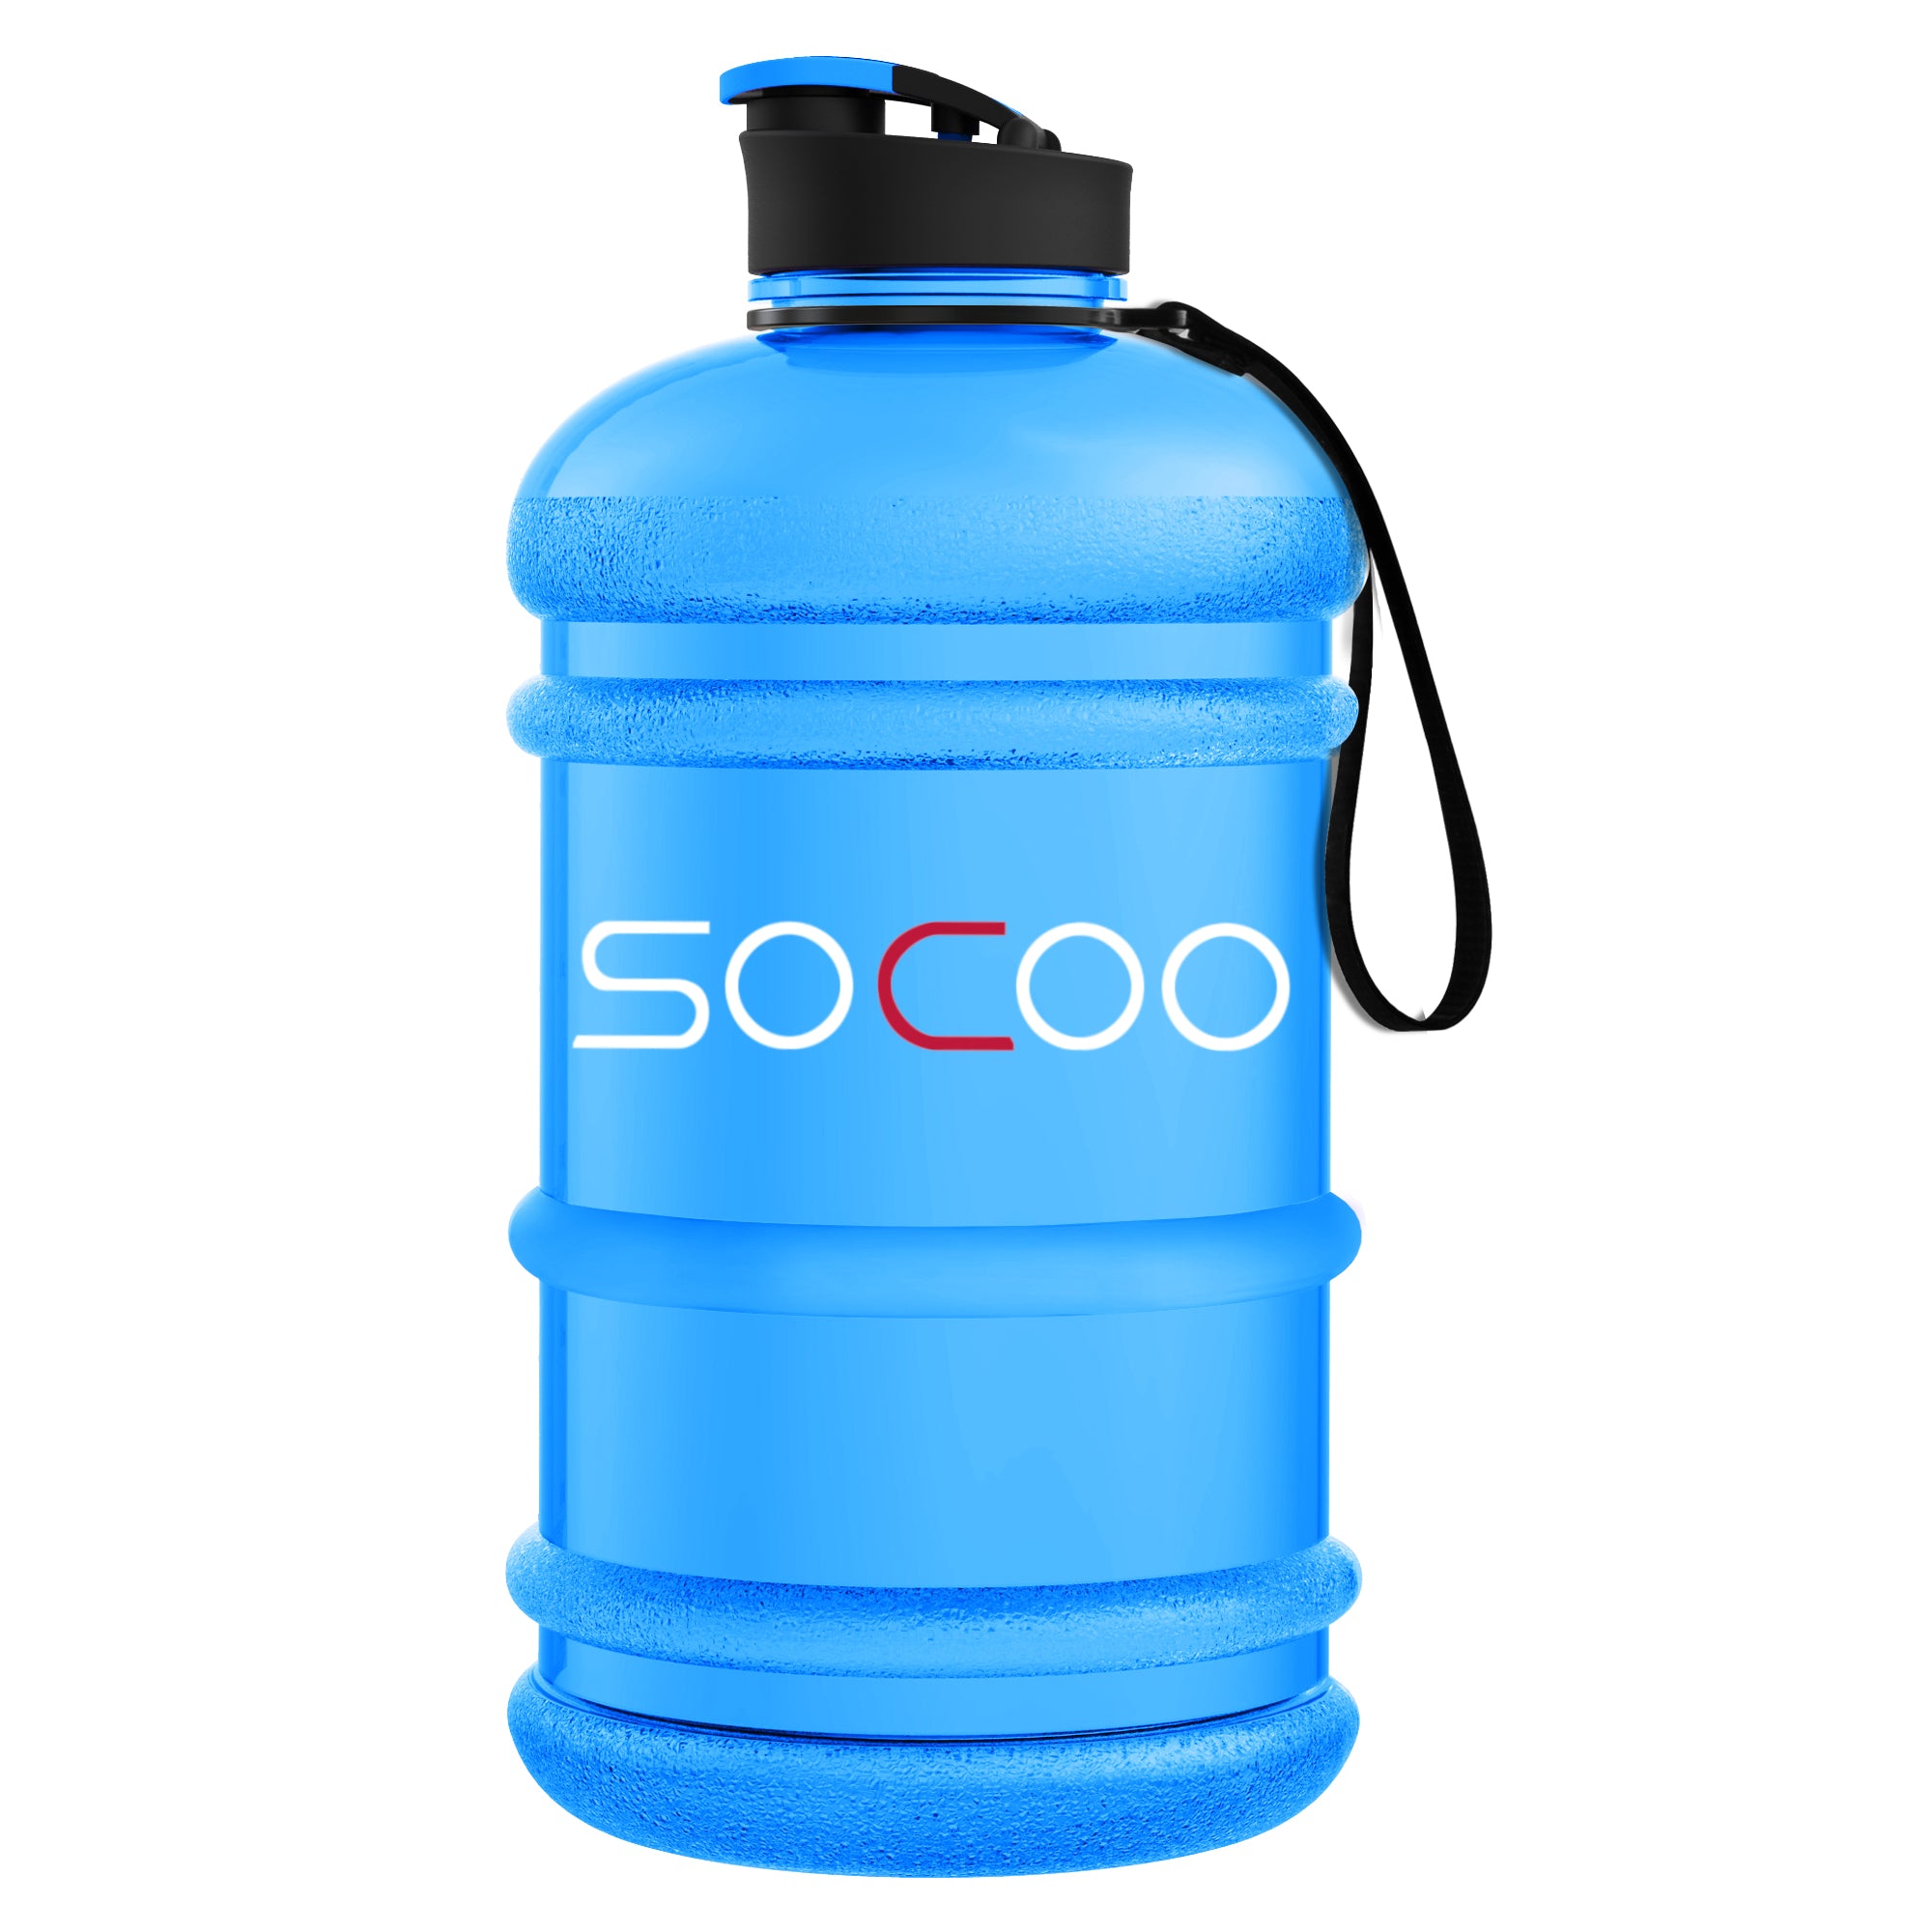 FUNUS Half Gallon Water Bottle BPA Free Big Water Bottle with